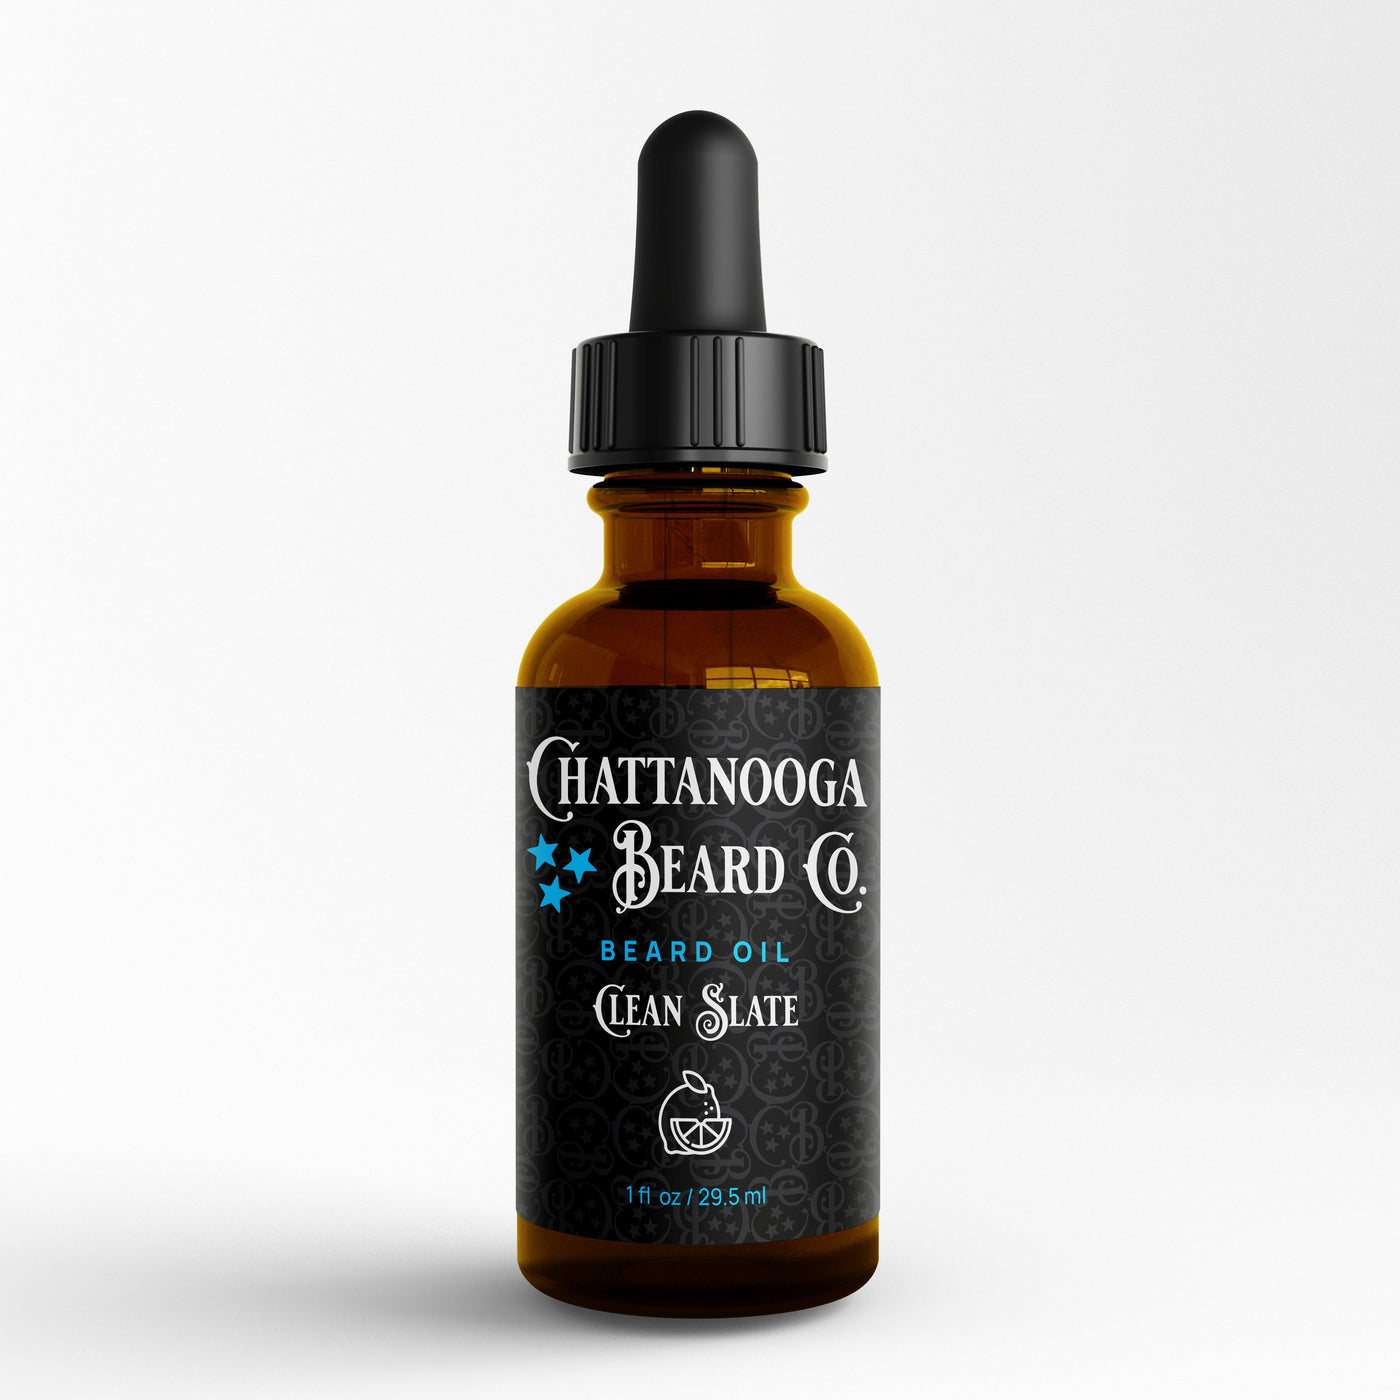 Chattanooga Beard Co. - Beard Oil Oil Chattanooga Beard Co. Clean Slate 